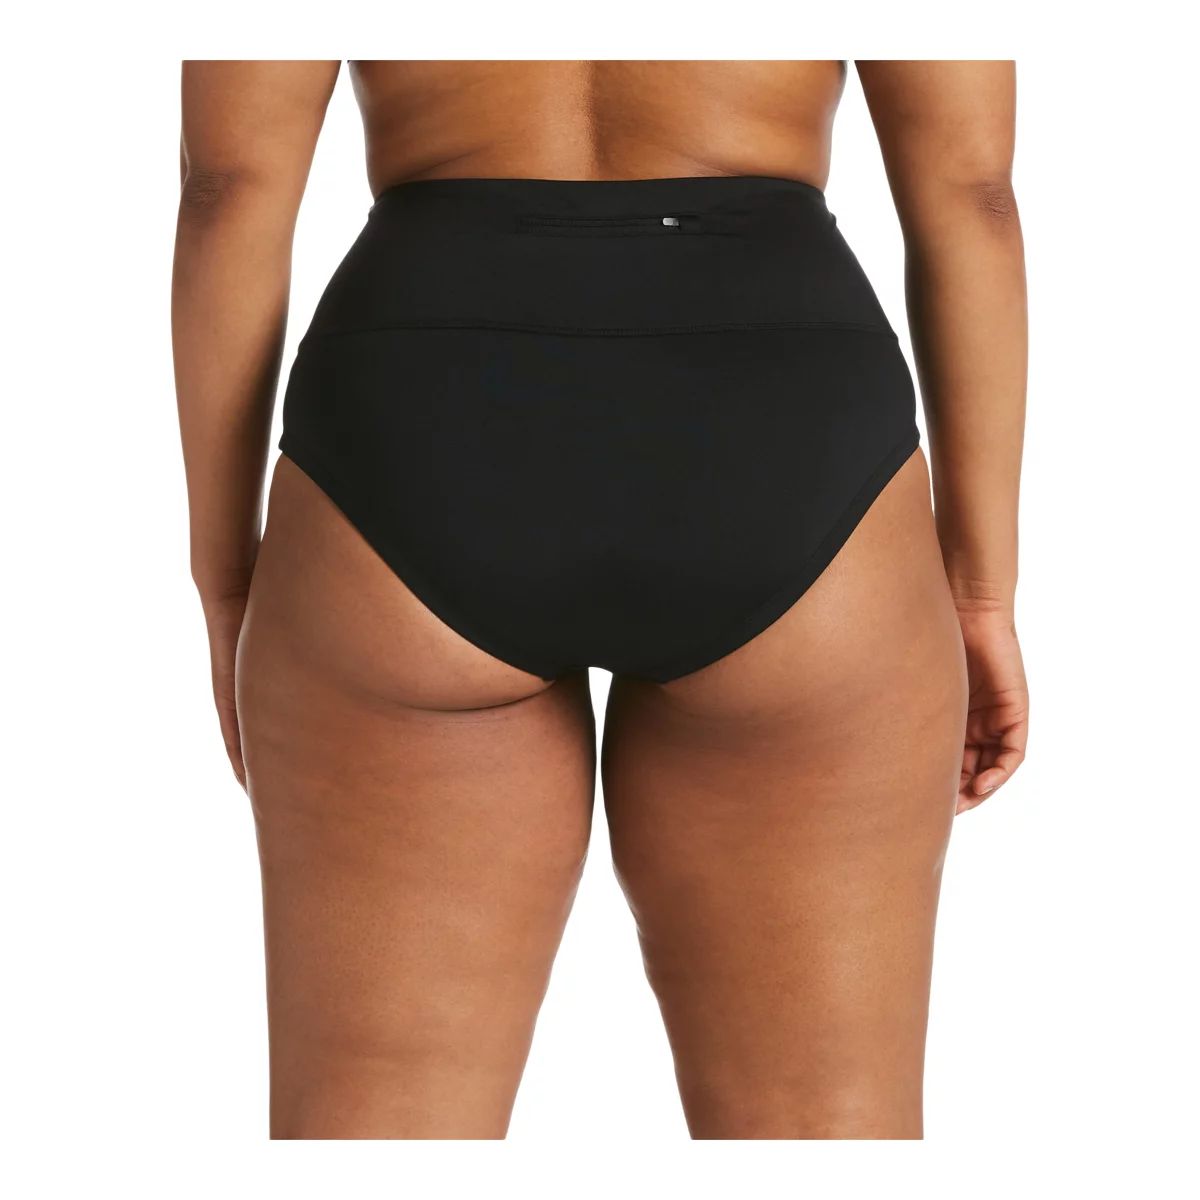 Nike Women's Essential High Waisted Plus Size Swimsuit Bikini Bottom, Sport